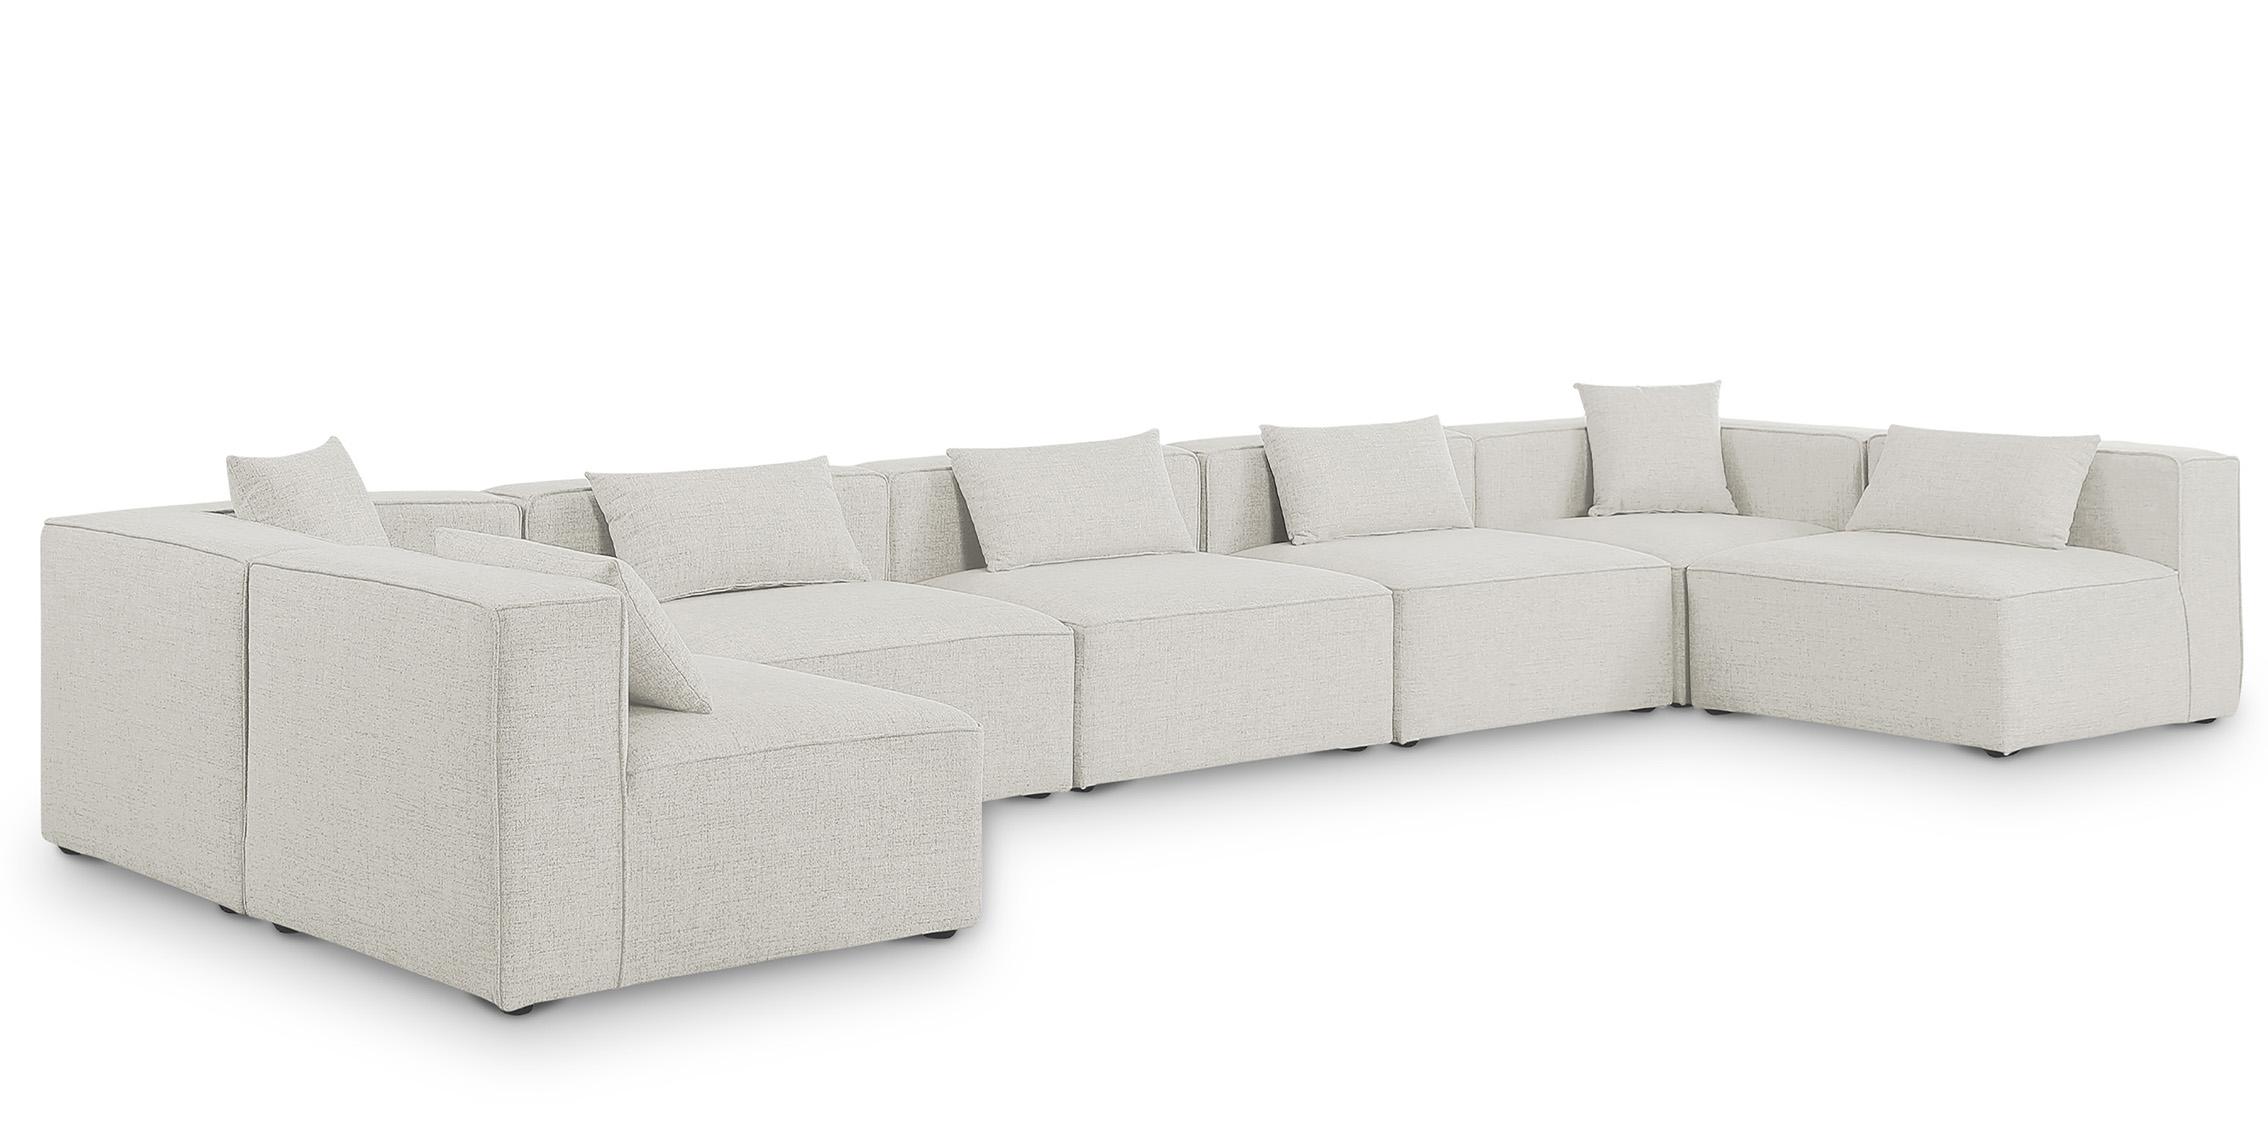 Contemporary, Modern Modular Sectional Sofa CUBE 630Cream-Sec7B 630Cream-Sec7B in Cream Linen